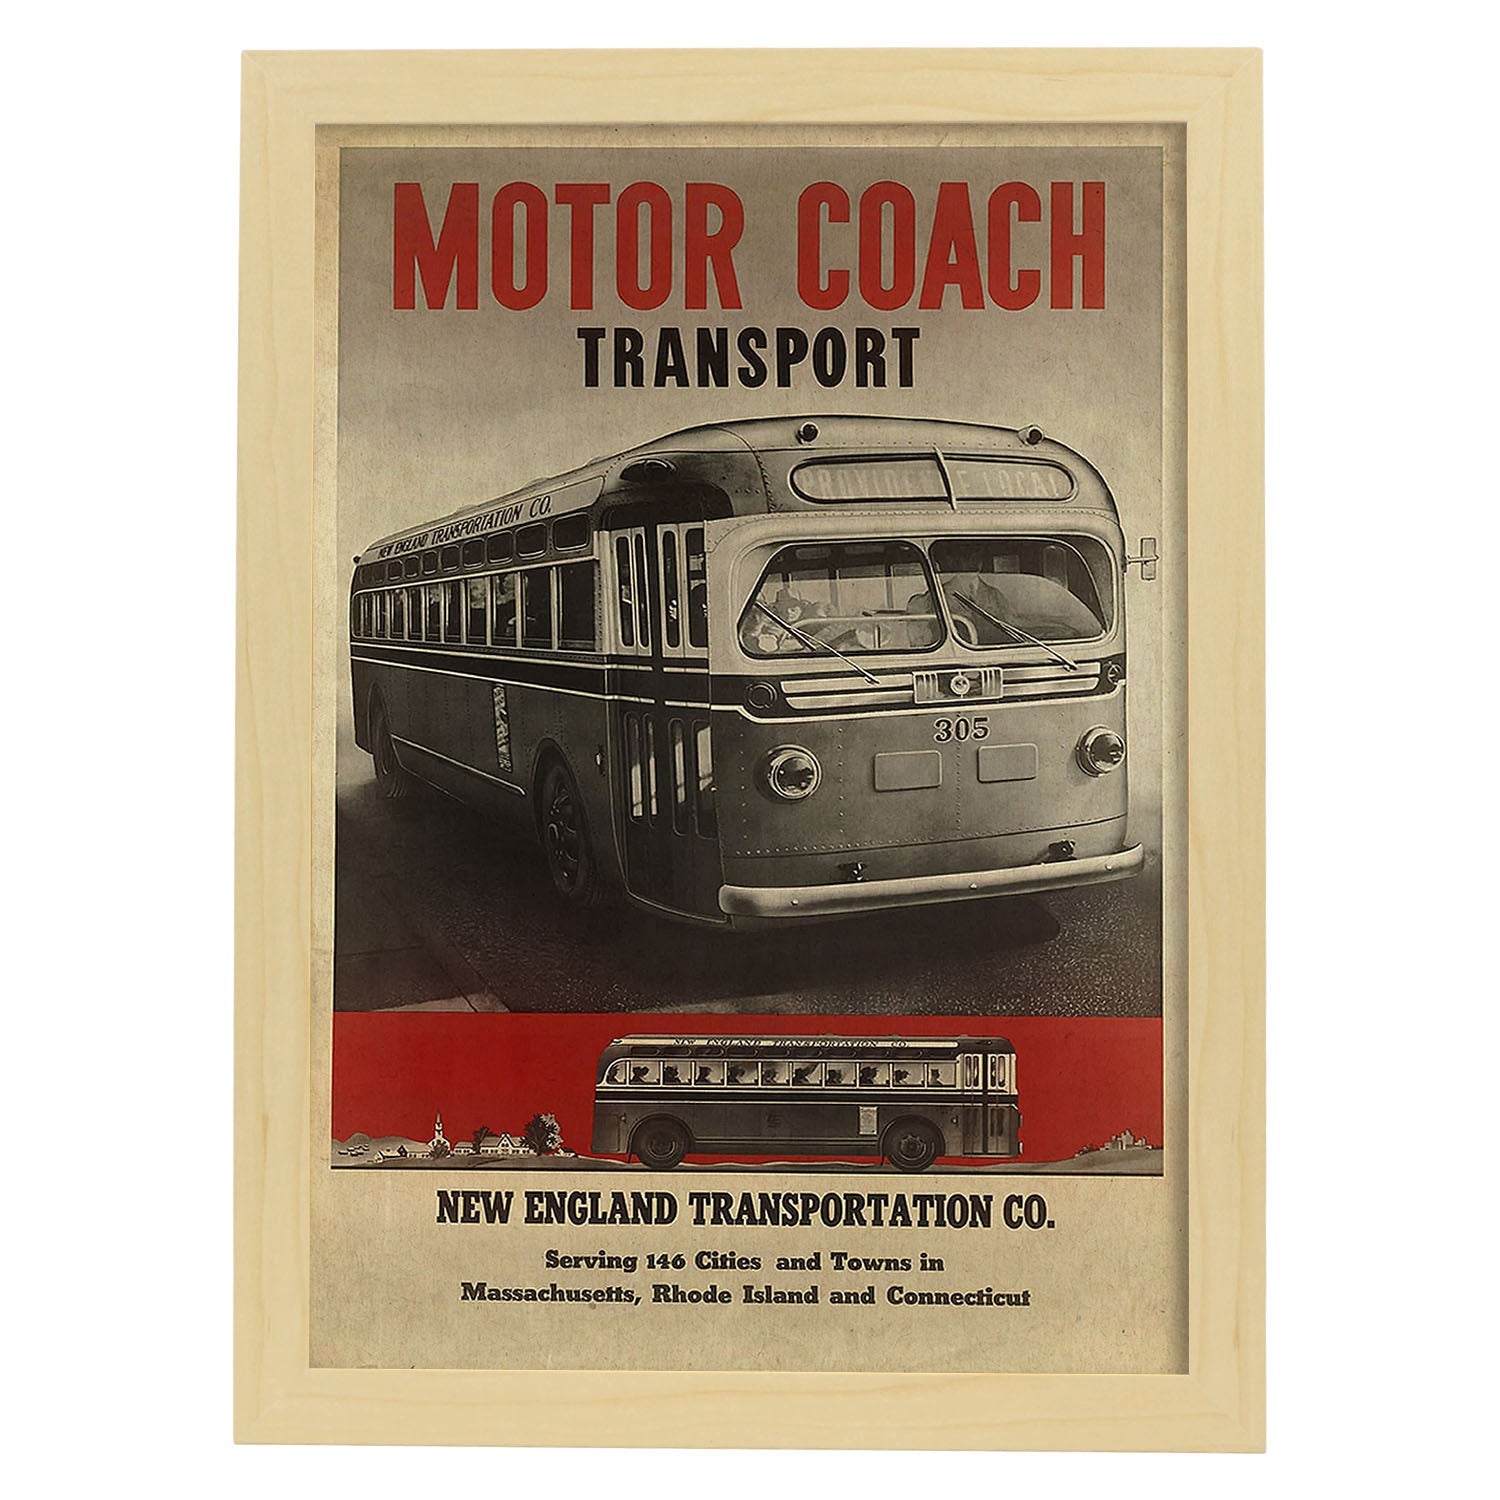 Poster vintage. Cartel vintage Motor Coach Transport de 1940.-Artwork-Nacnic-A4-Marco Madera clara-Nacnic Estudio SL